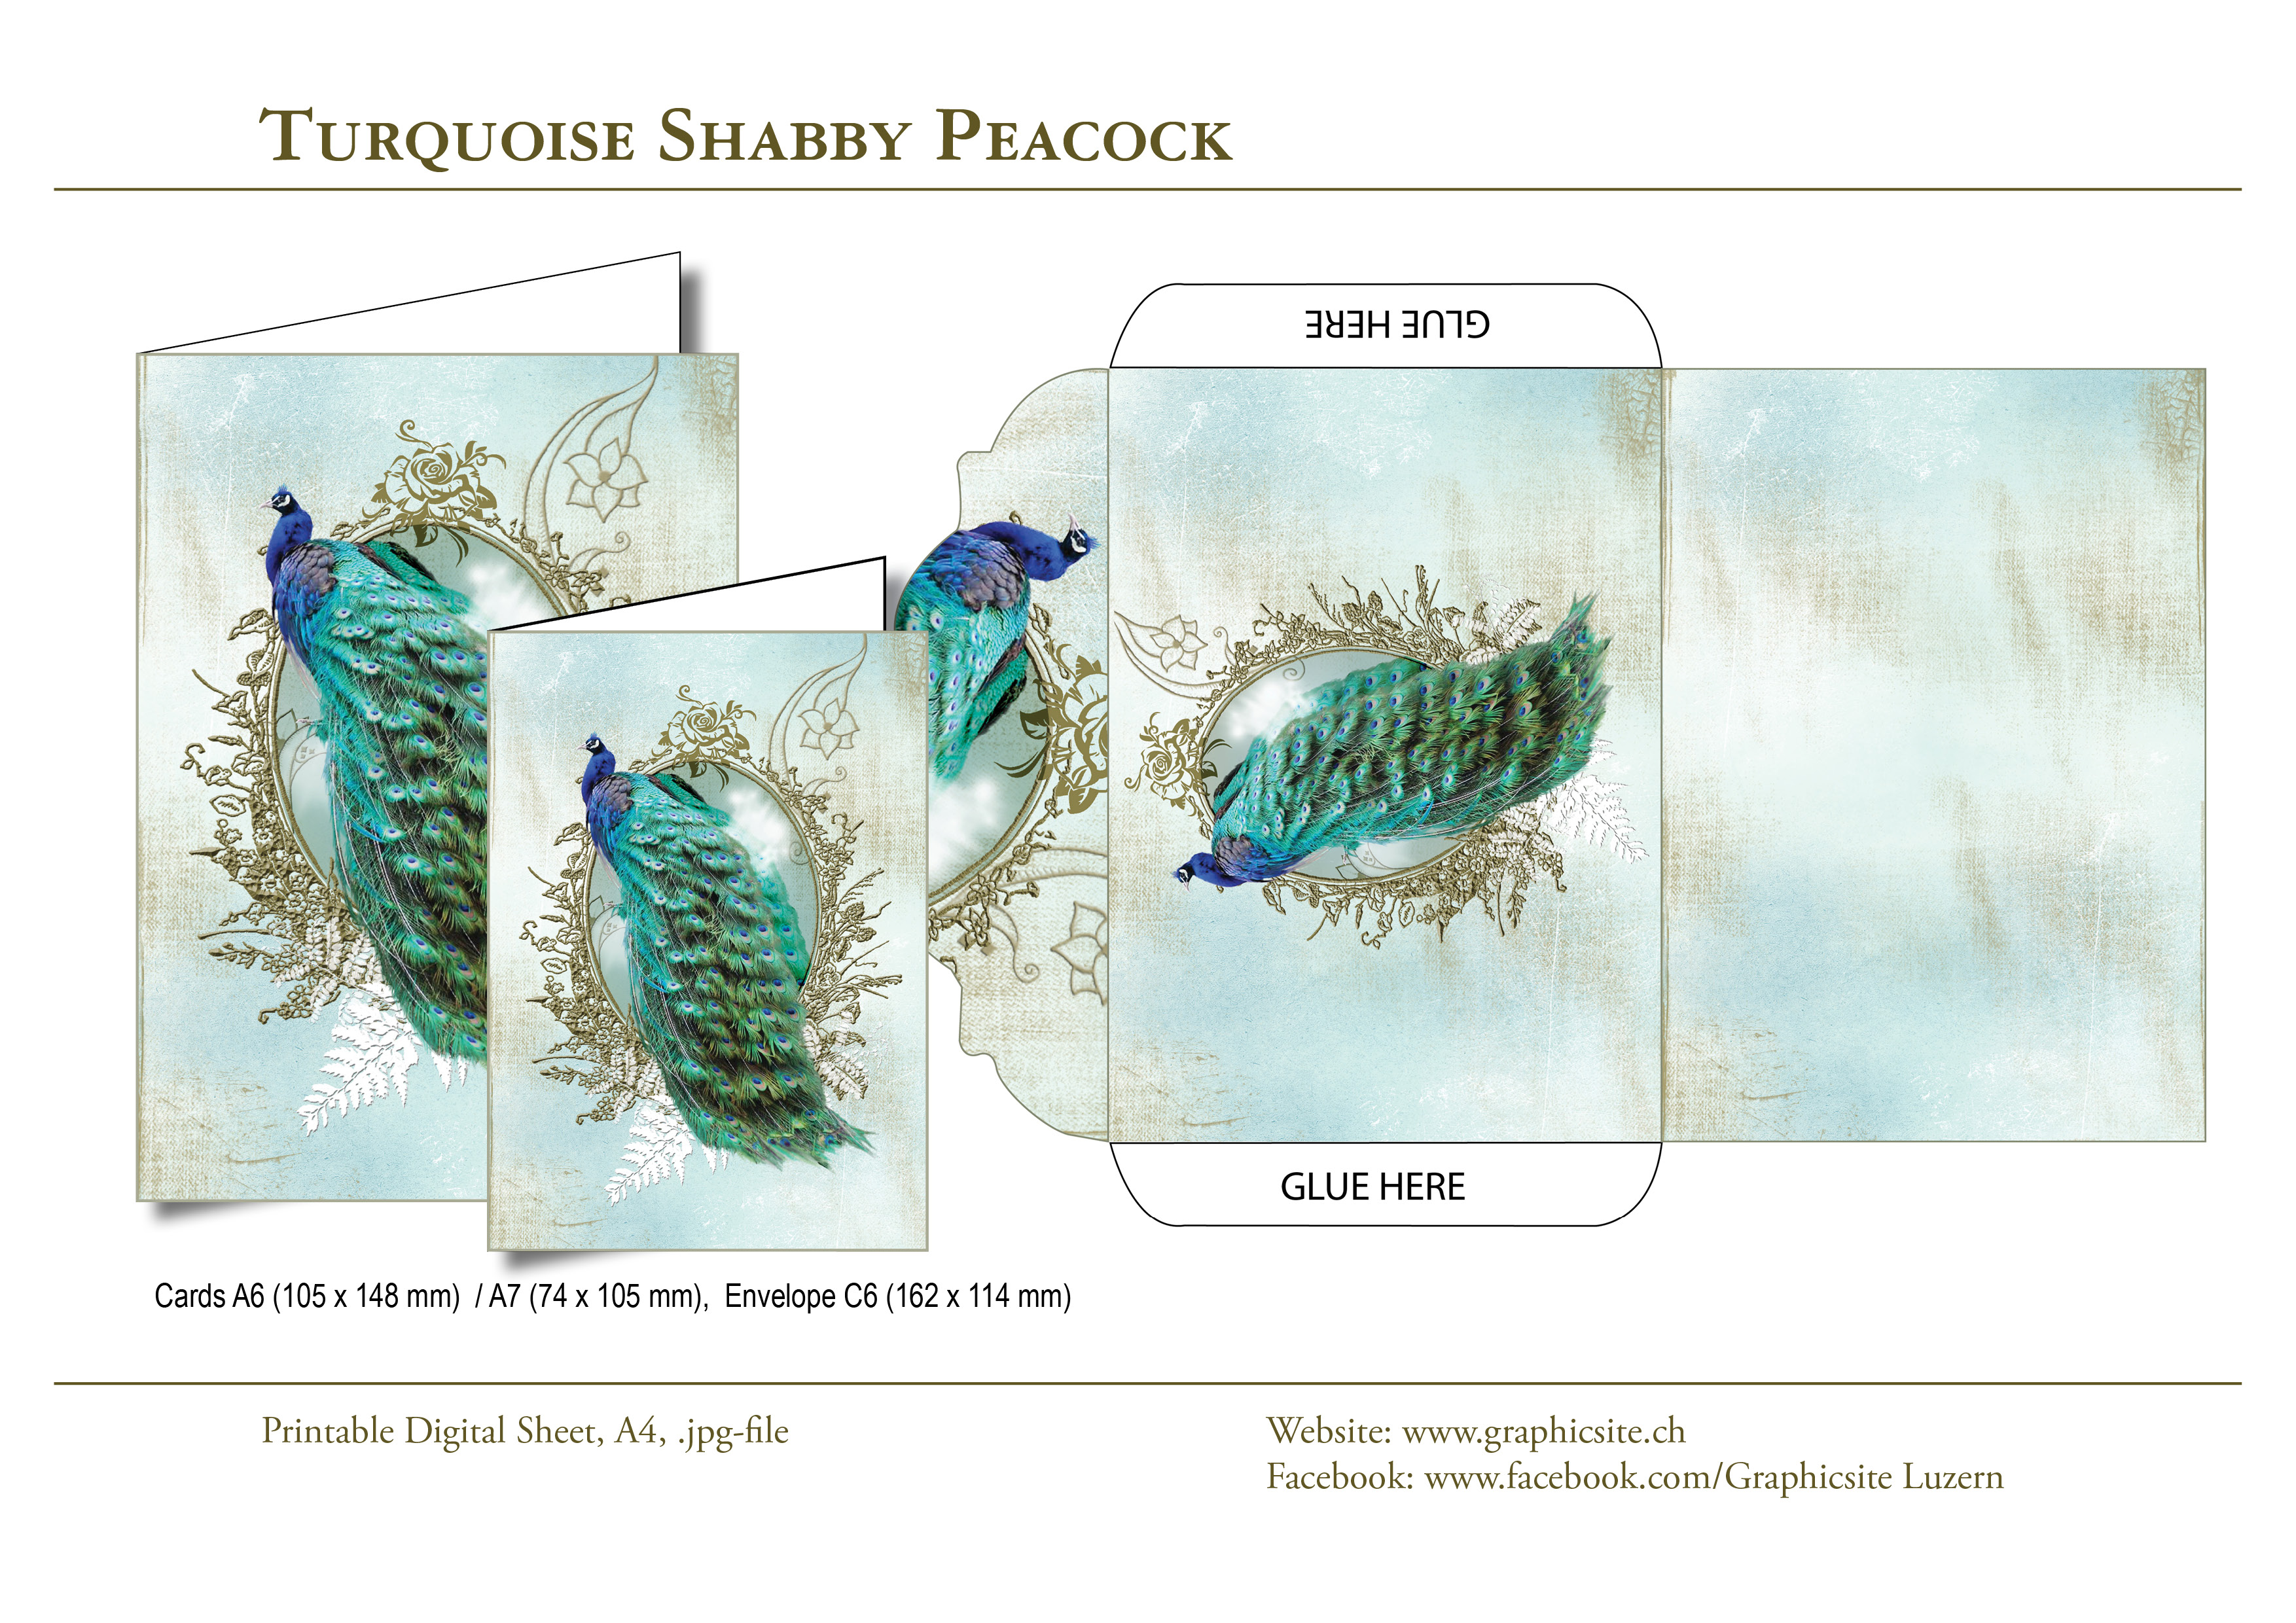 Printable Digital Sheets - DIN A-Formats - Shabby Peacock